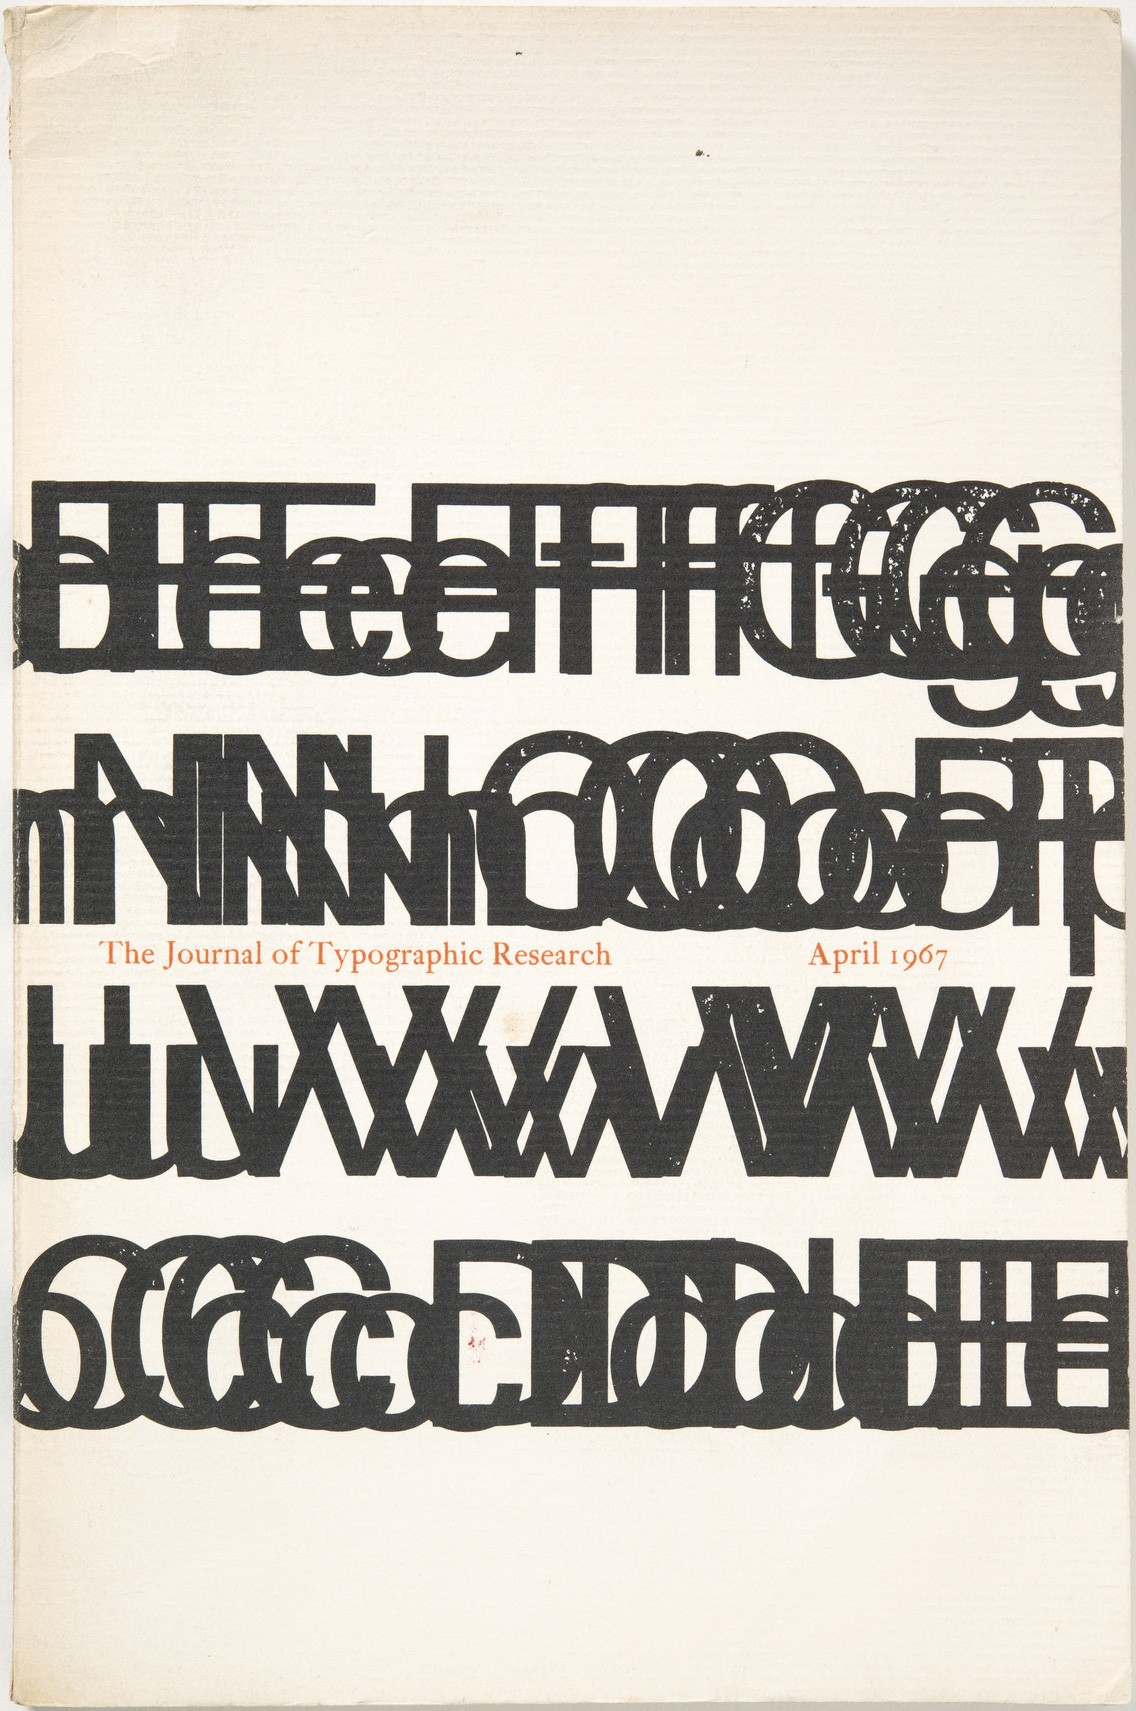 Image: Jack Werner Stauffacher, Journal of Typographic Research, designed 1966–67